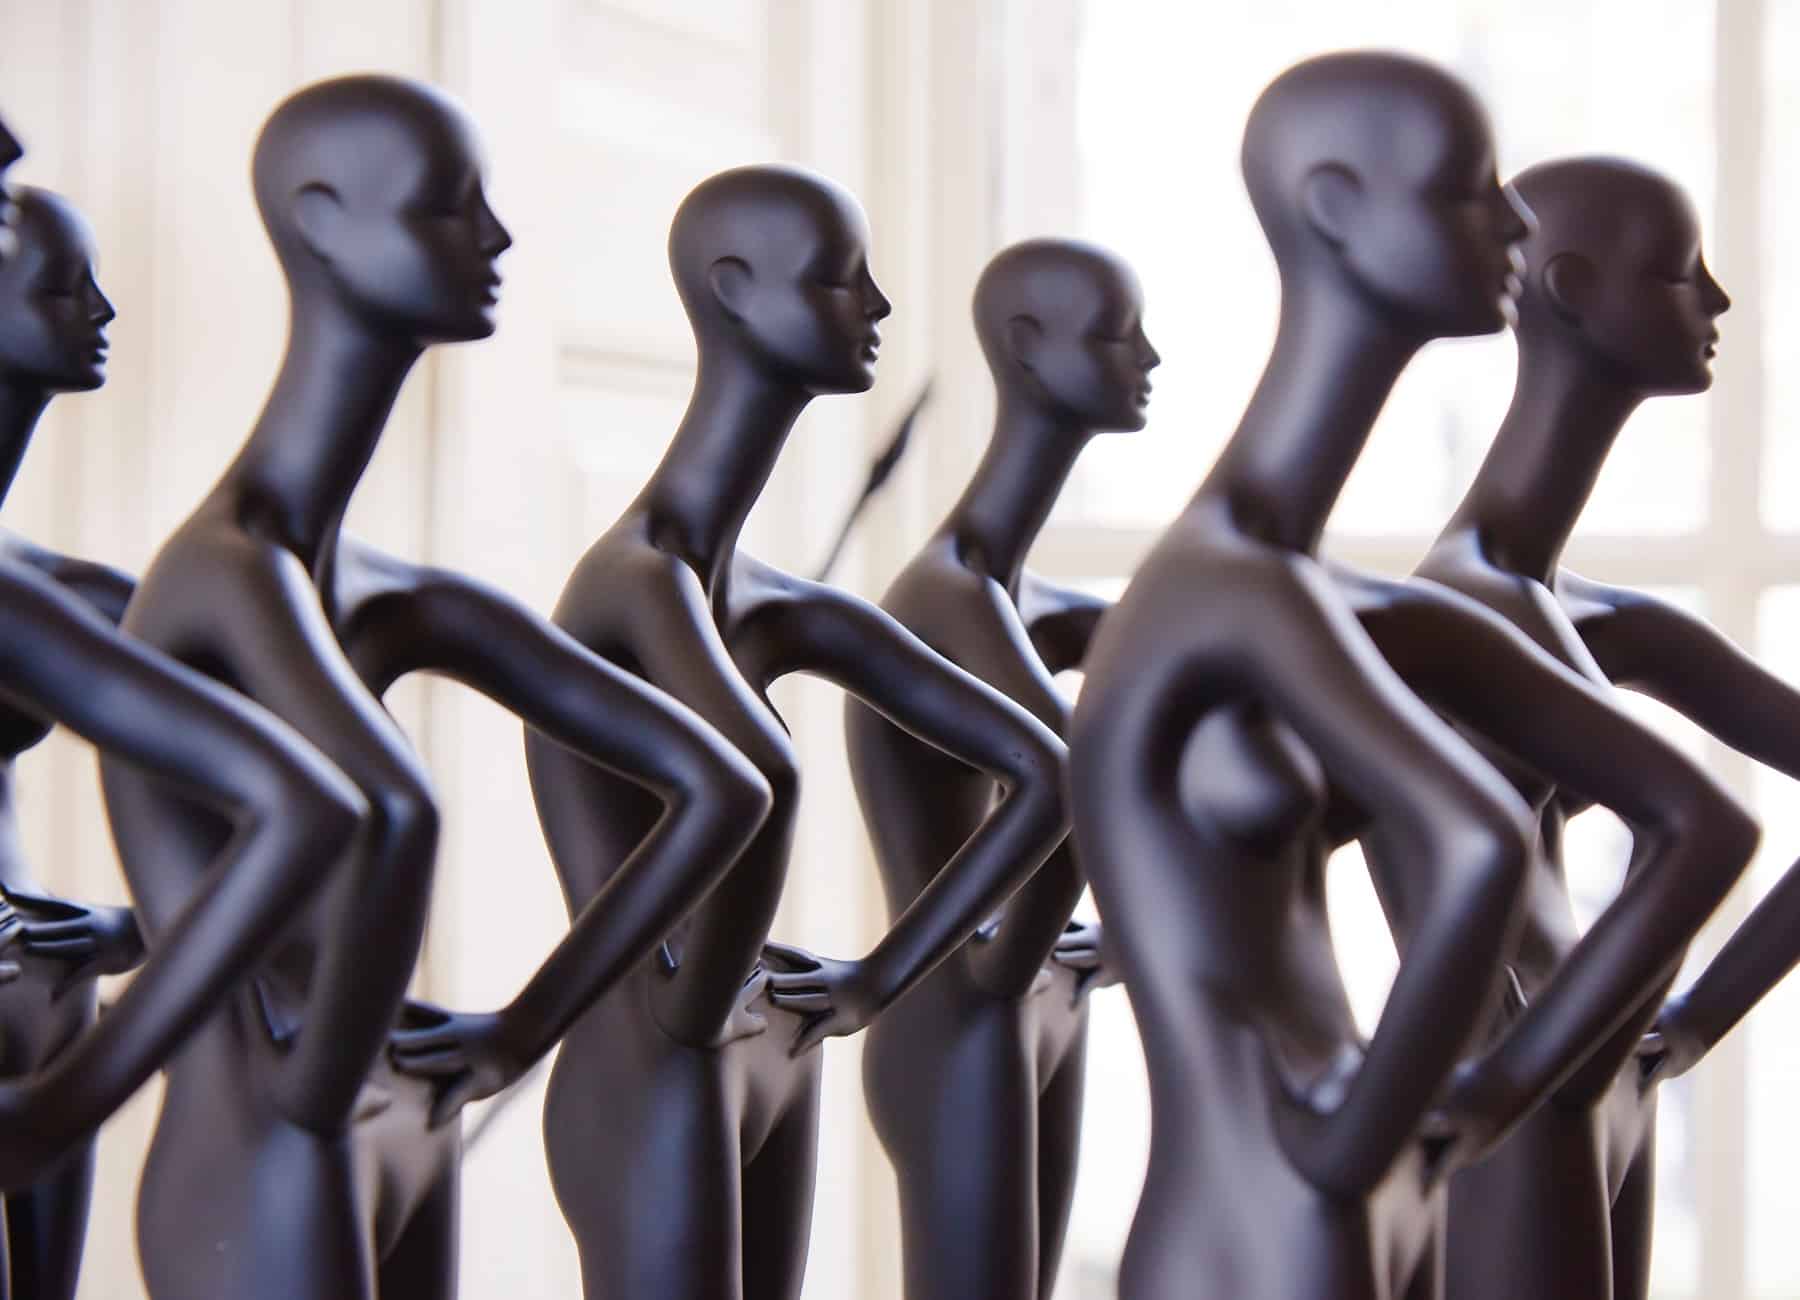 Mini Aloof mannequins ifs16 curator award 2016